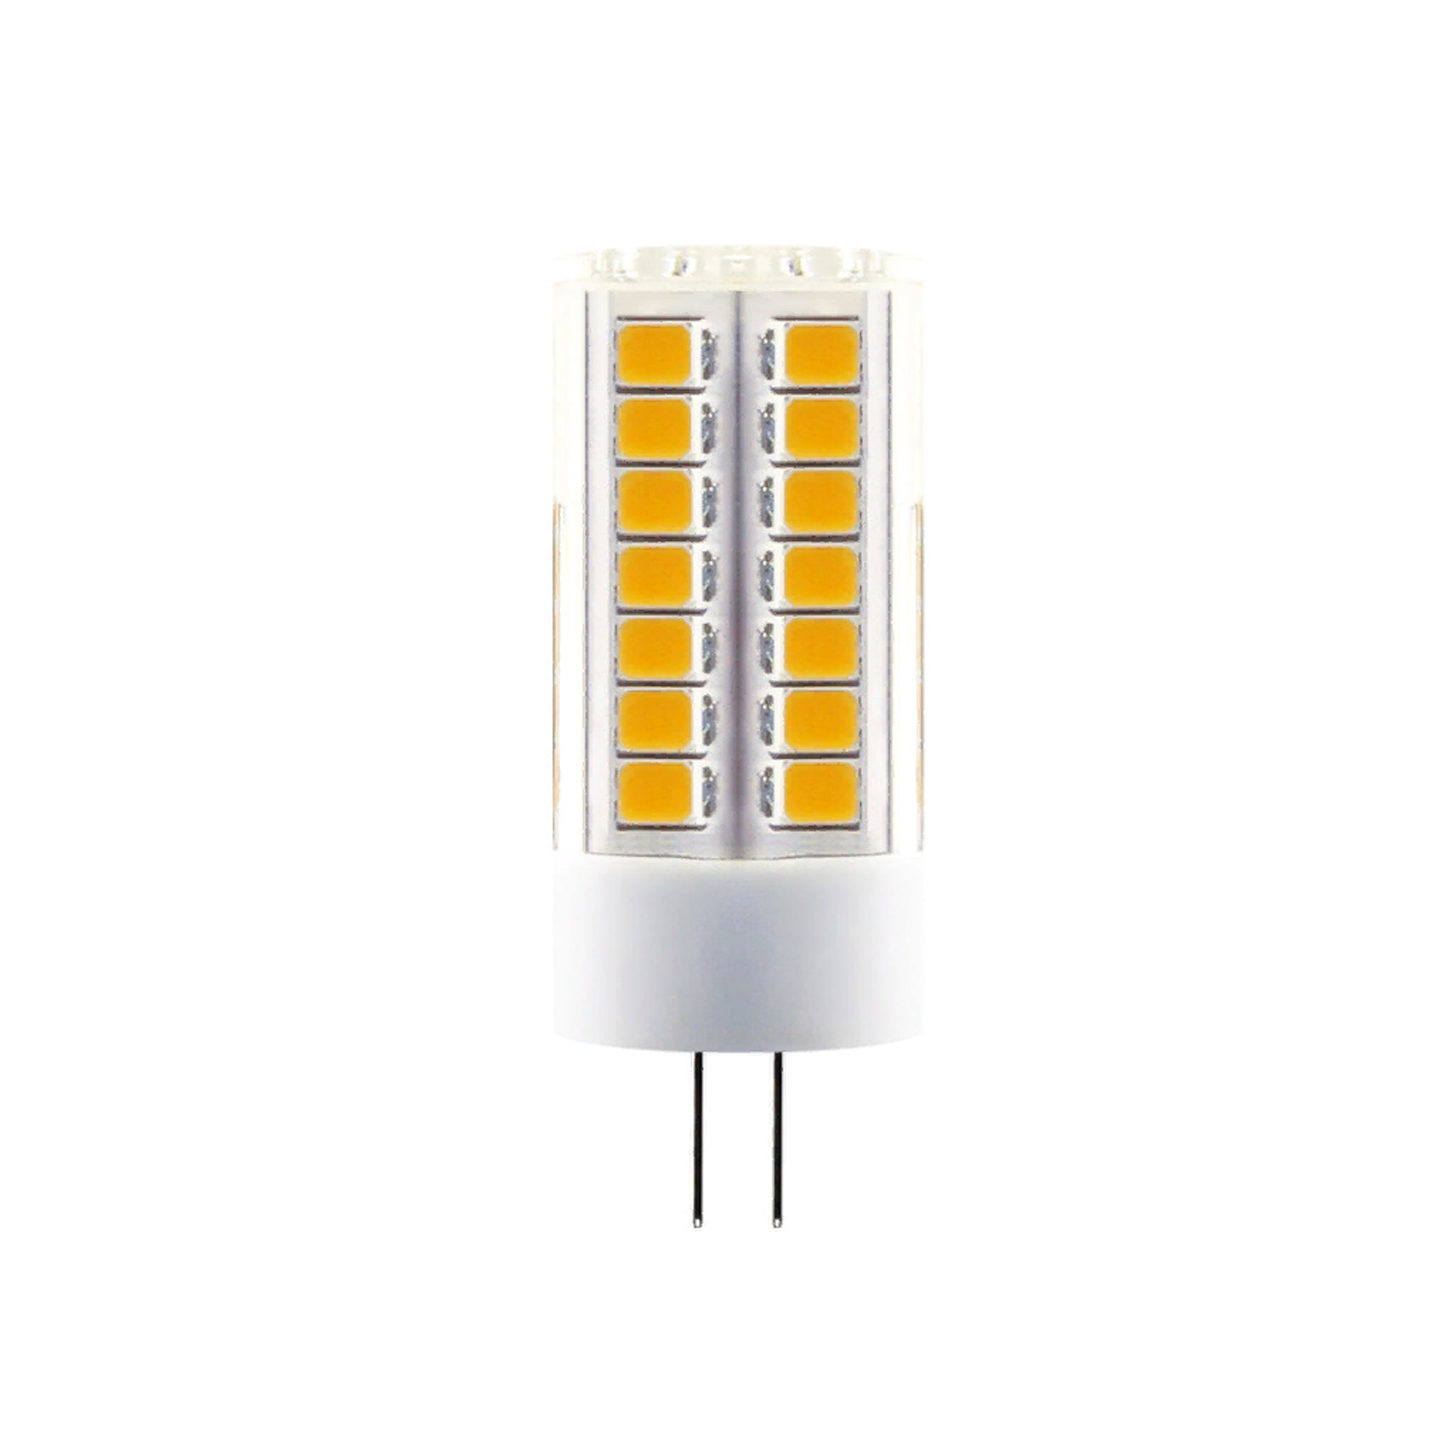 TDM Electric g4 5 Вт. Лампа светодиодная g4 sq0340-0210. Лампа cветодиодная TDM Electric. Светодиодная лампа TDM g4-3 Вт-AC/DC 12 В-4000 К, SMD, 16x43 мм sq0340-0094.